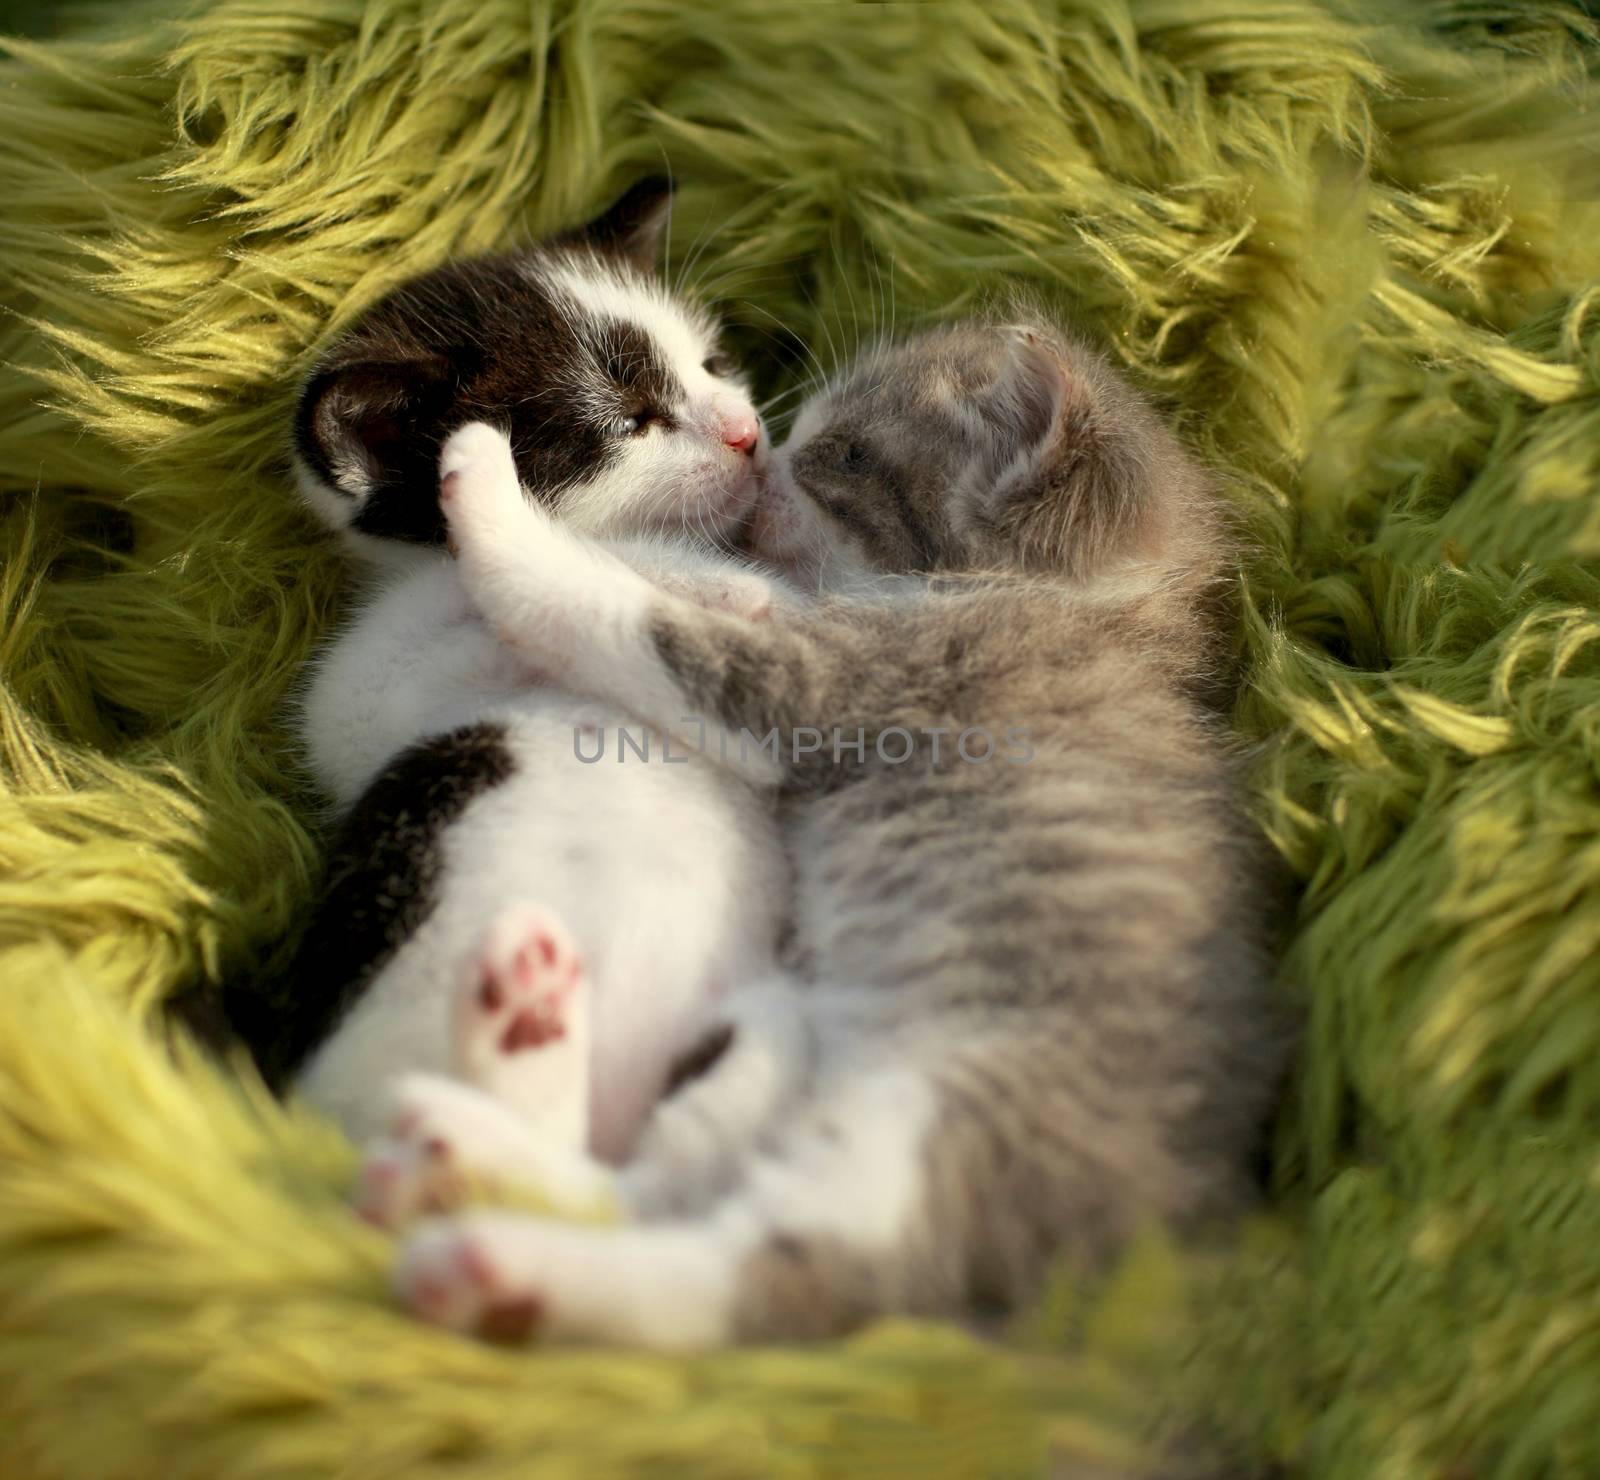 Hugging Little Kittens Outdoors in Natural Light